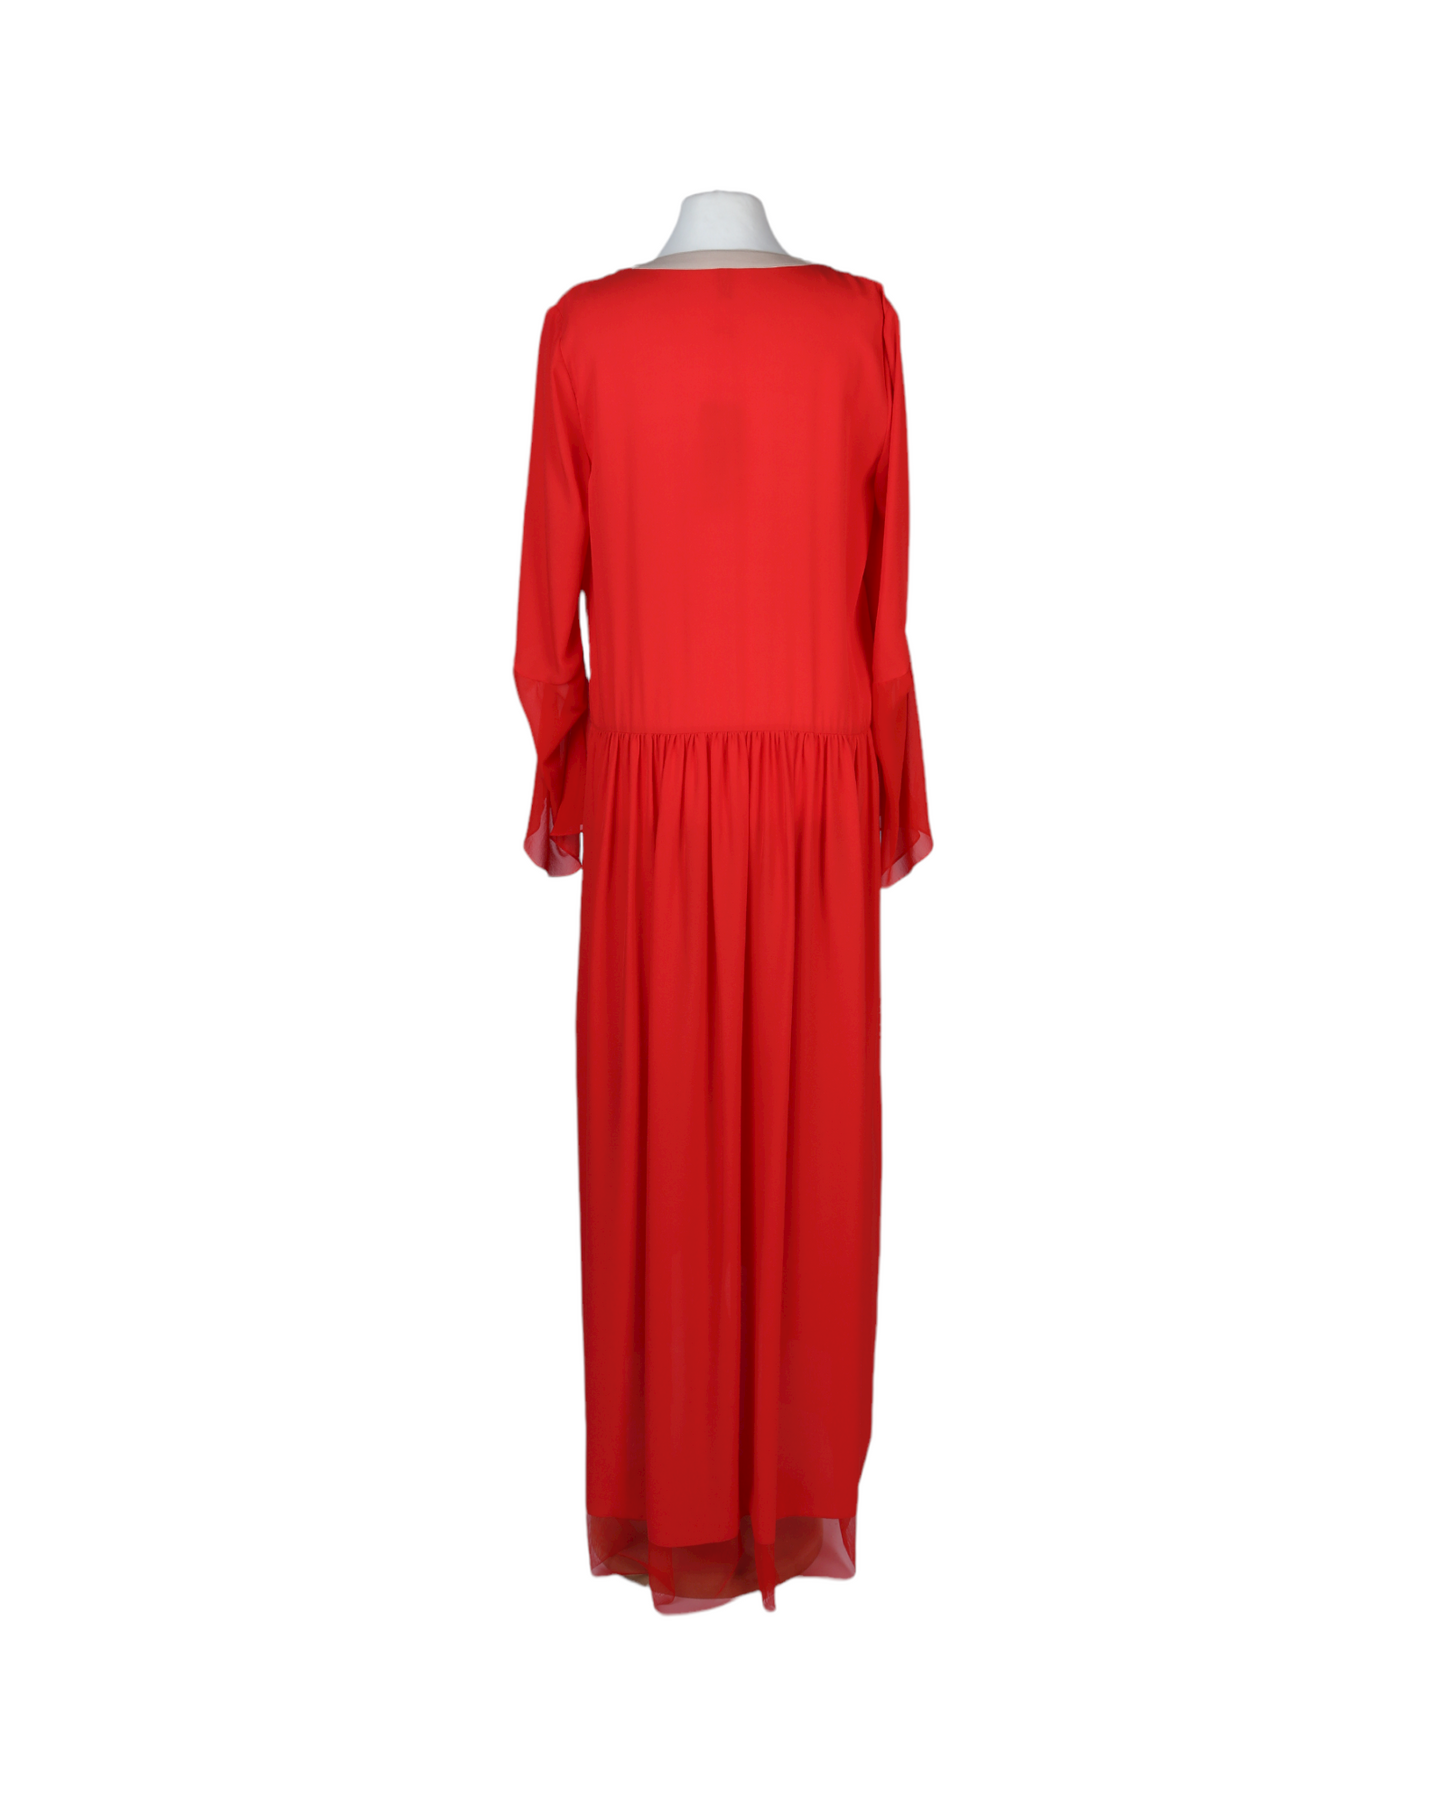 BCBG Maxazria Red Dress